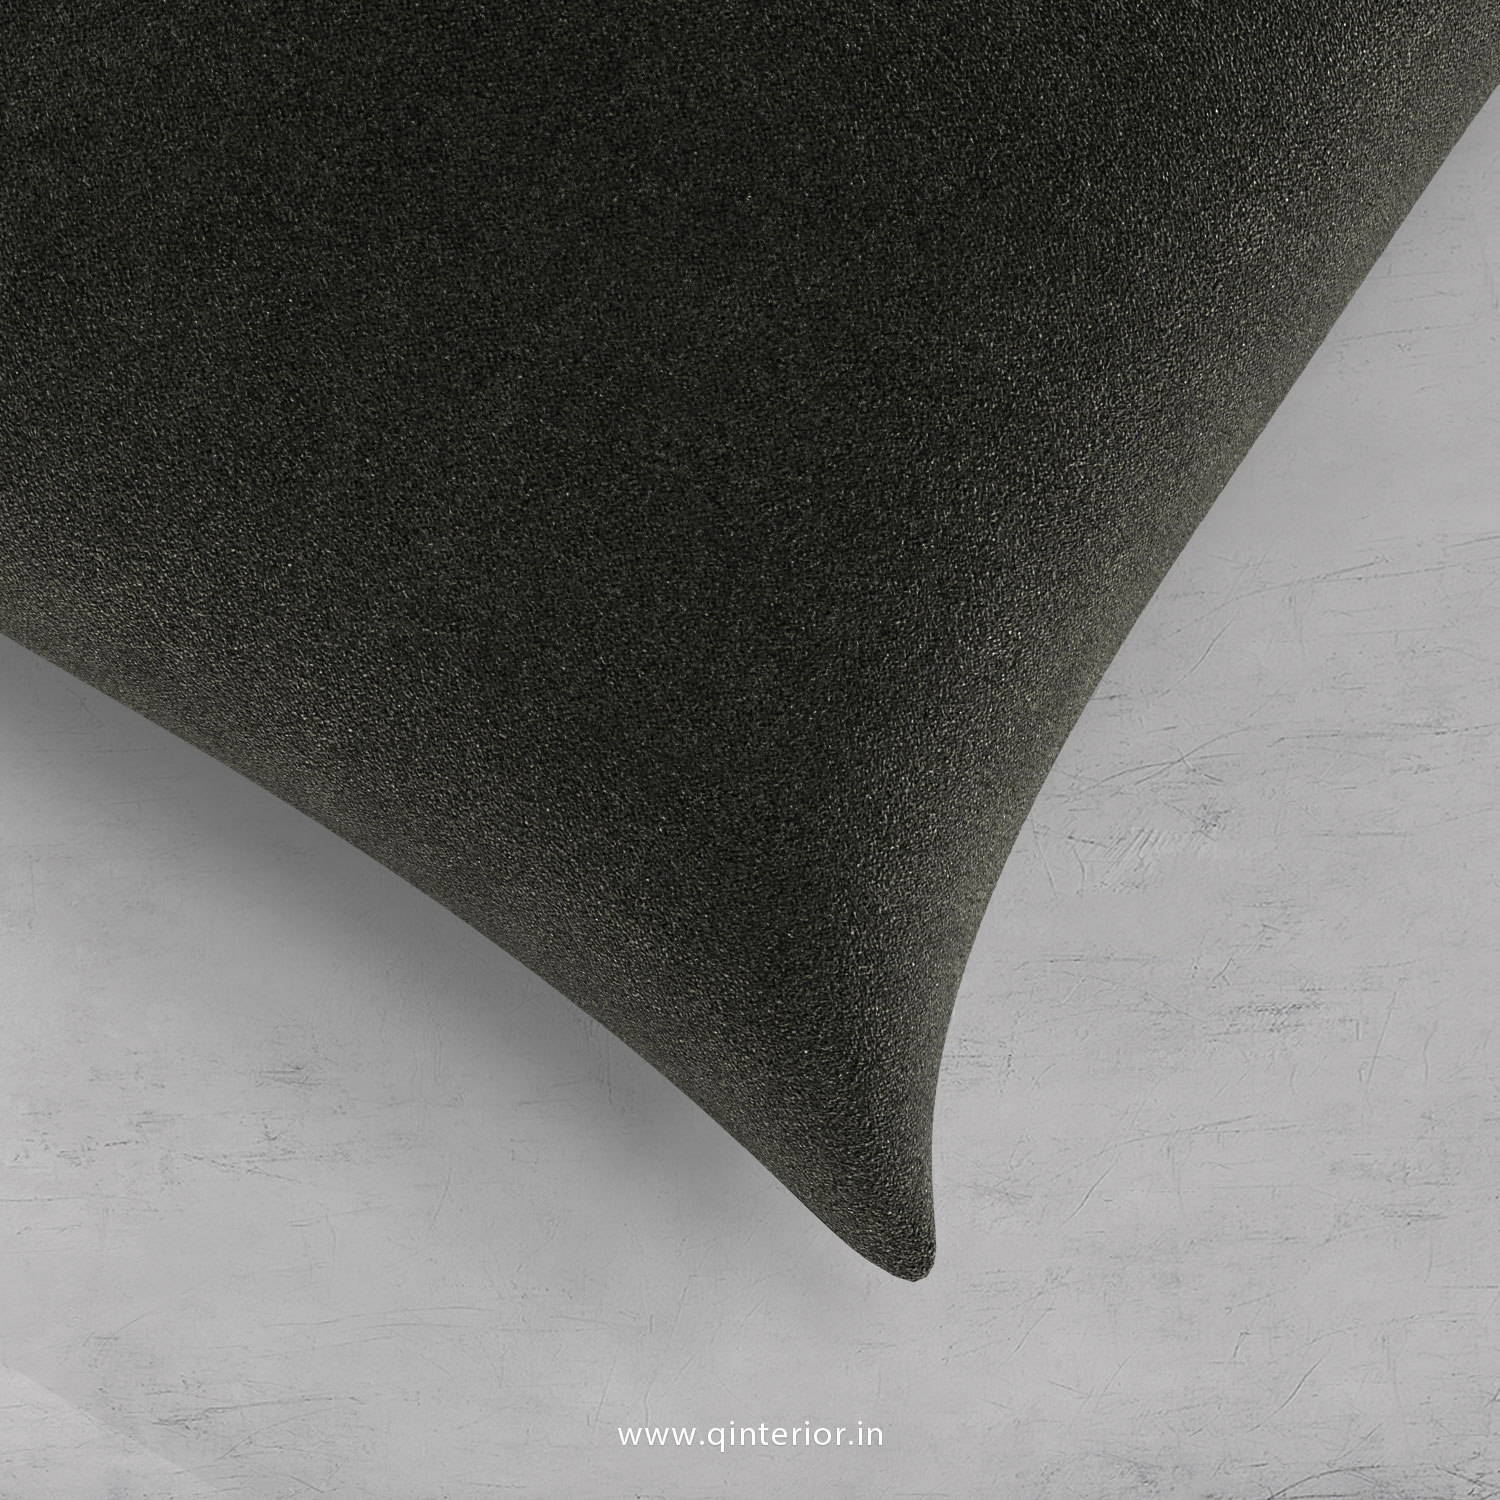 Cushion With Cushion Cover in Velvet Fabric - CUS001 VL07